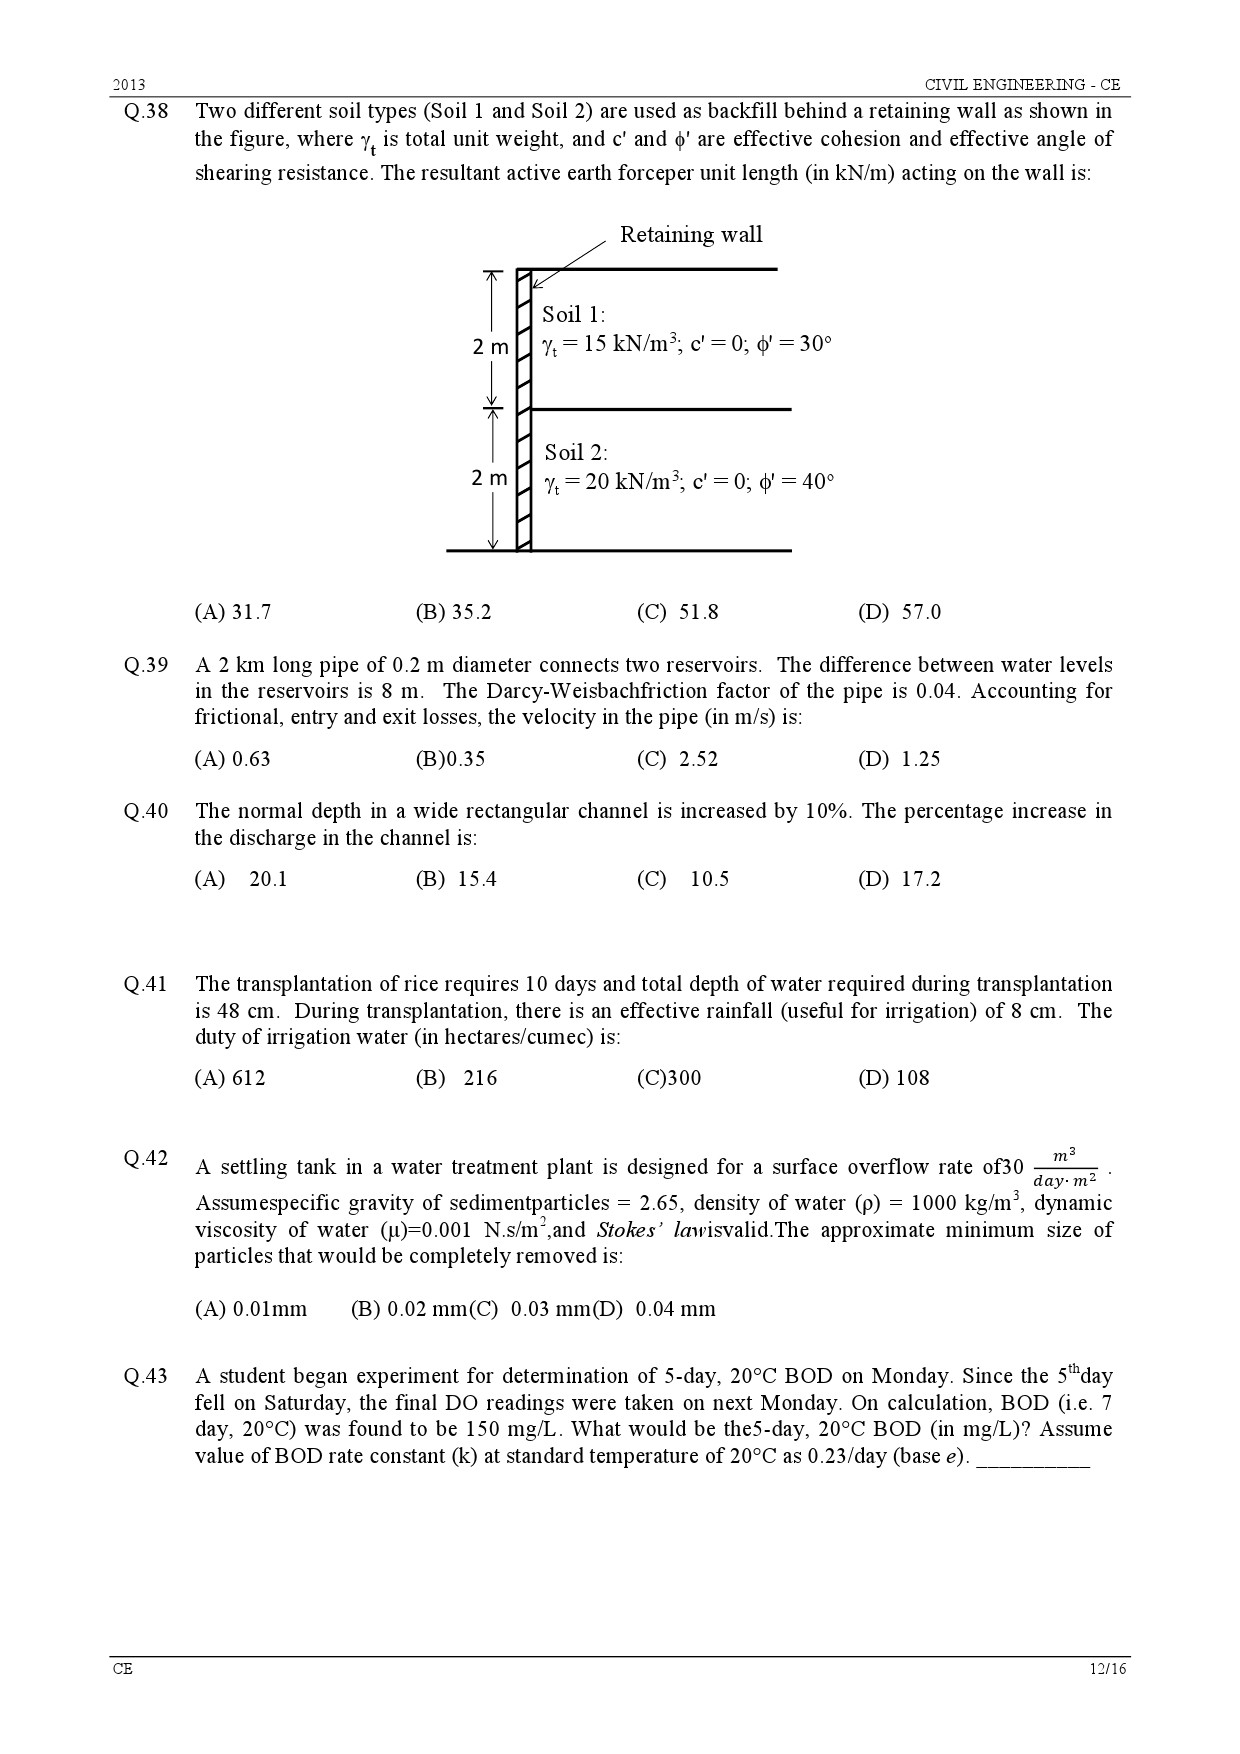 GATE Exam Question Paper 2013 Civil Engineering 12